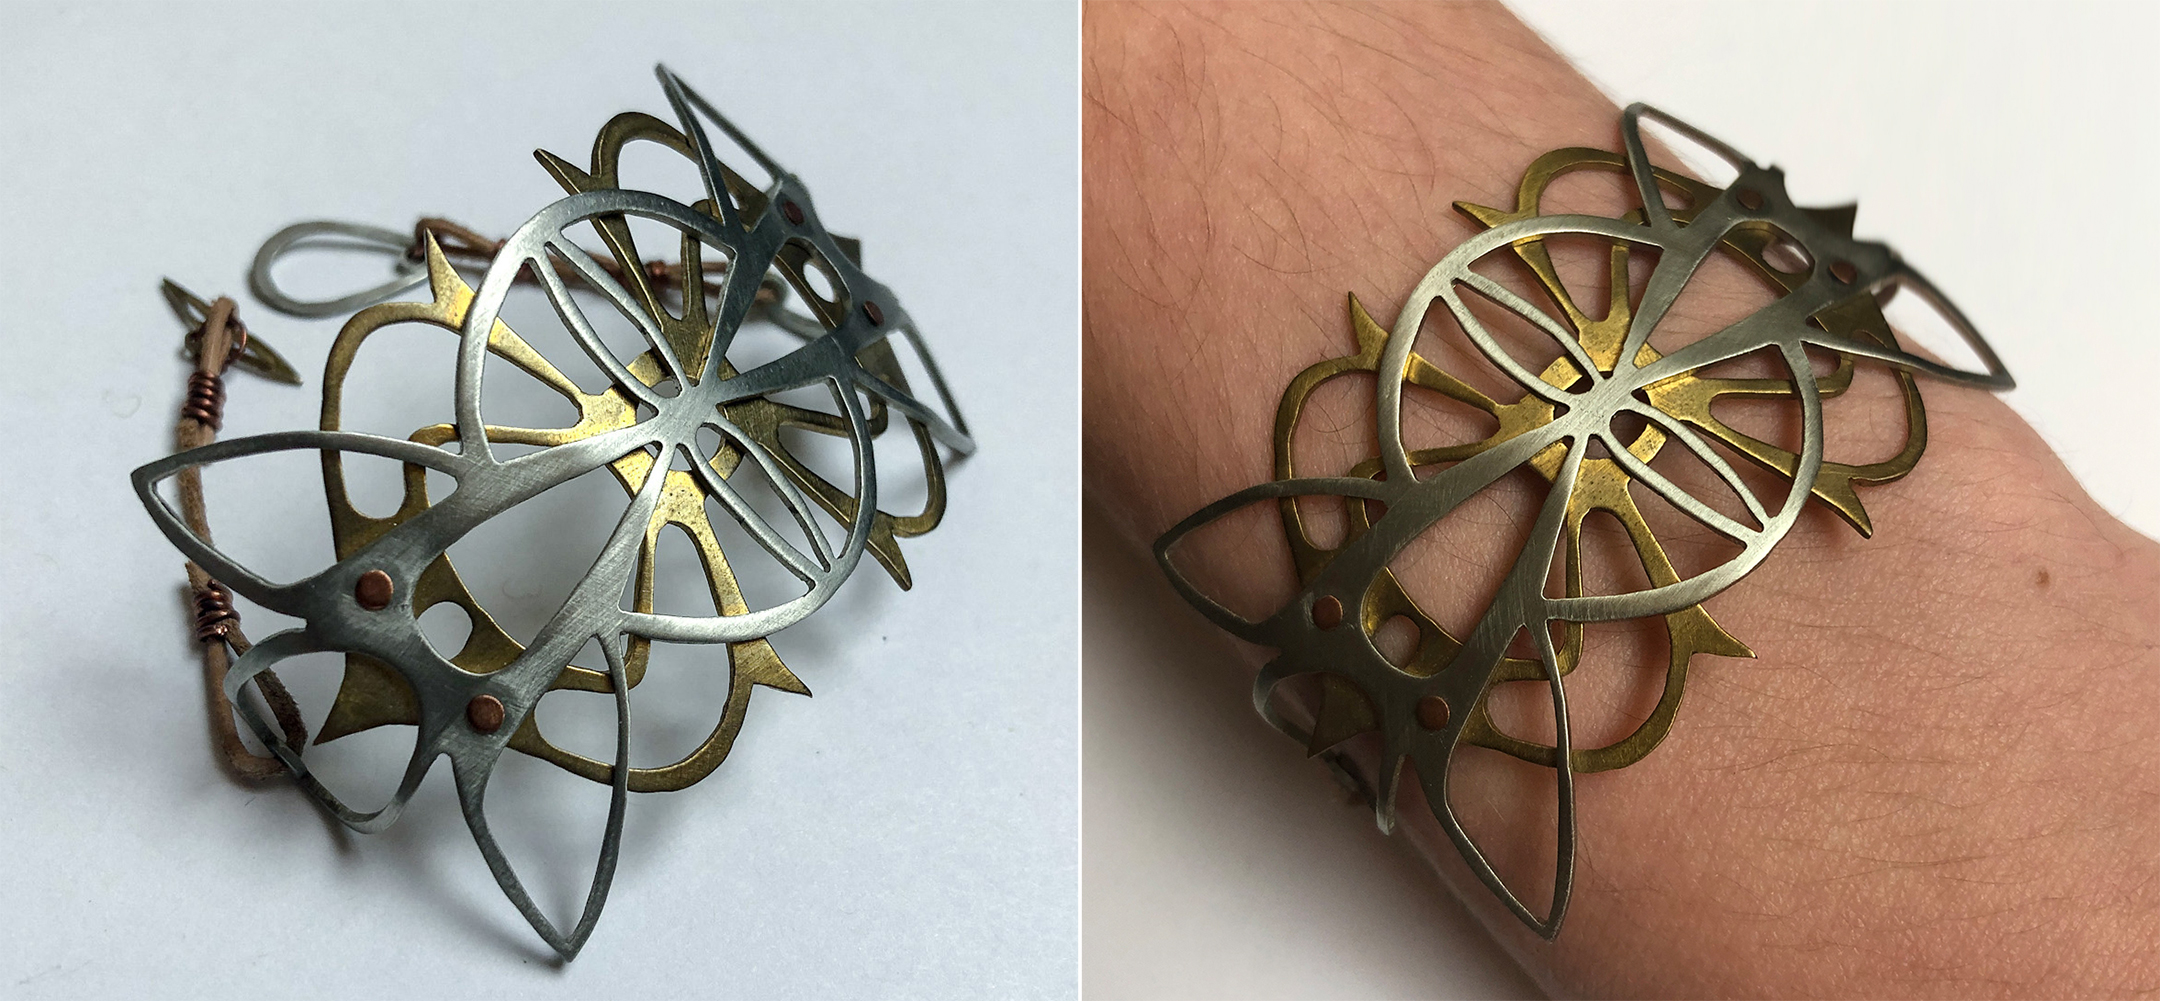 Two photos of a metal bracelet